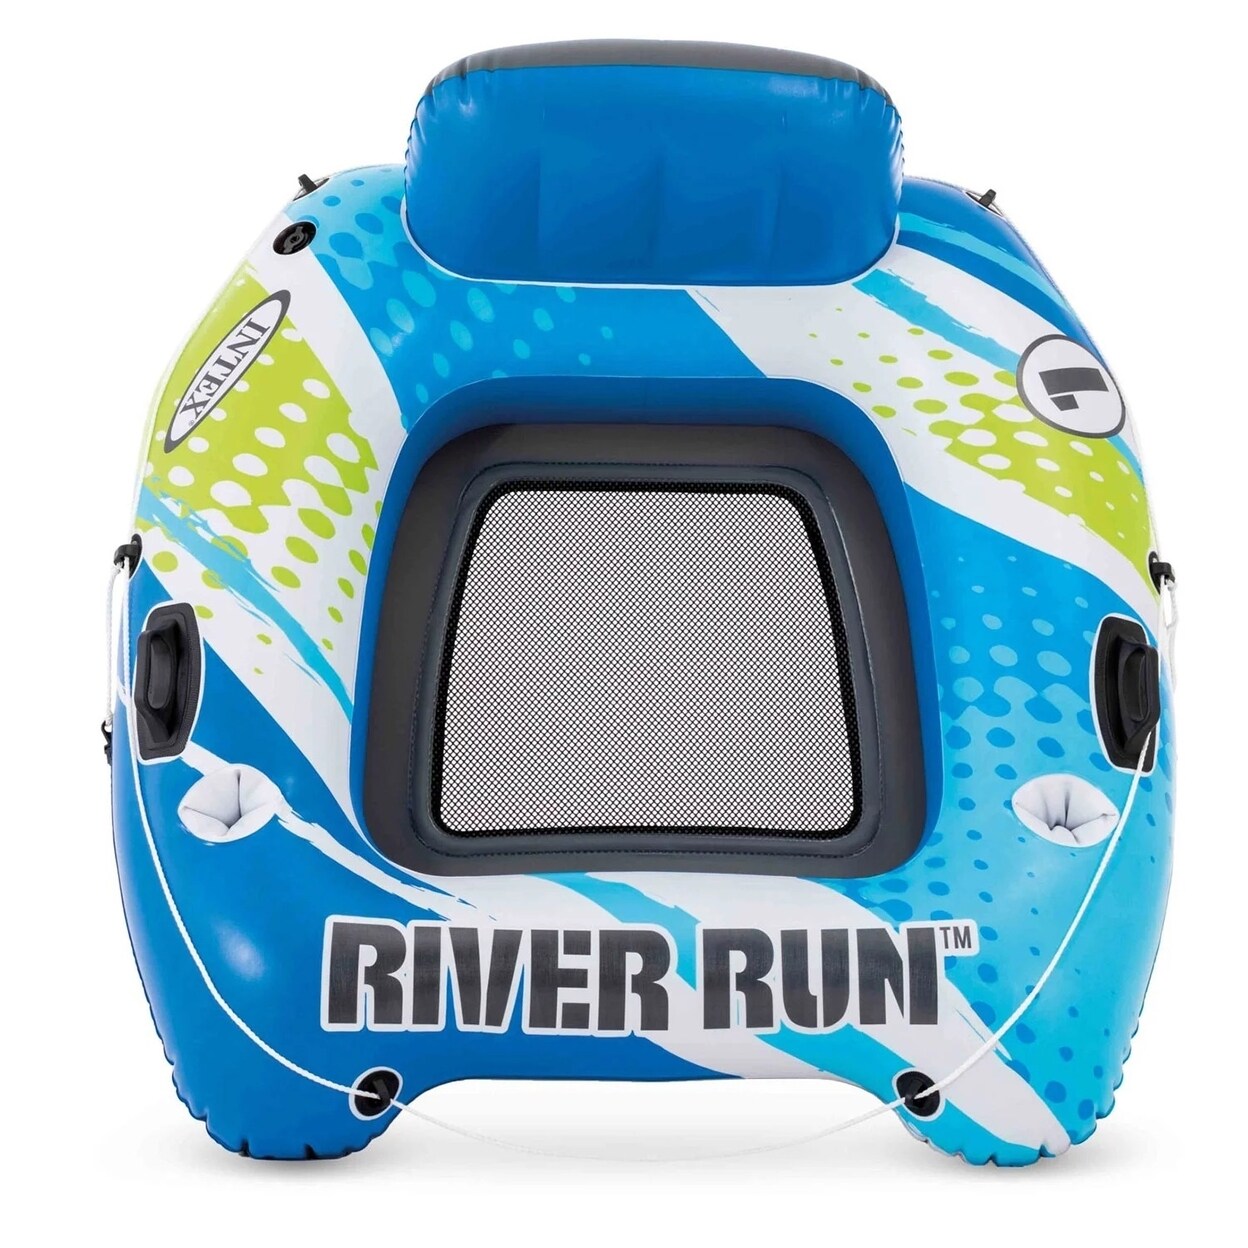 Intex   River Run 2-Pack Sports Lounge